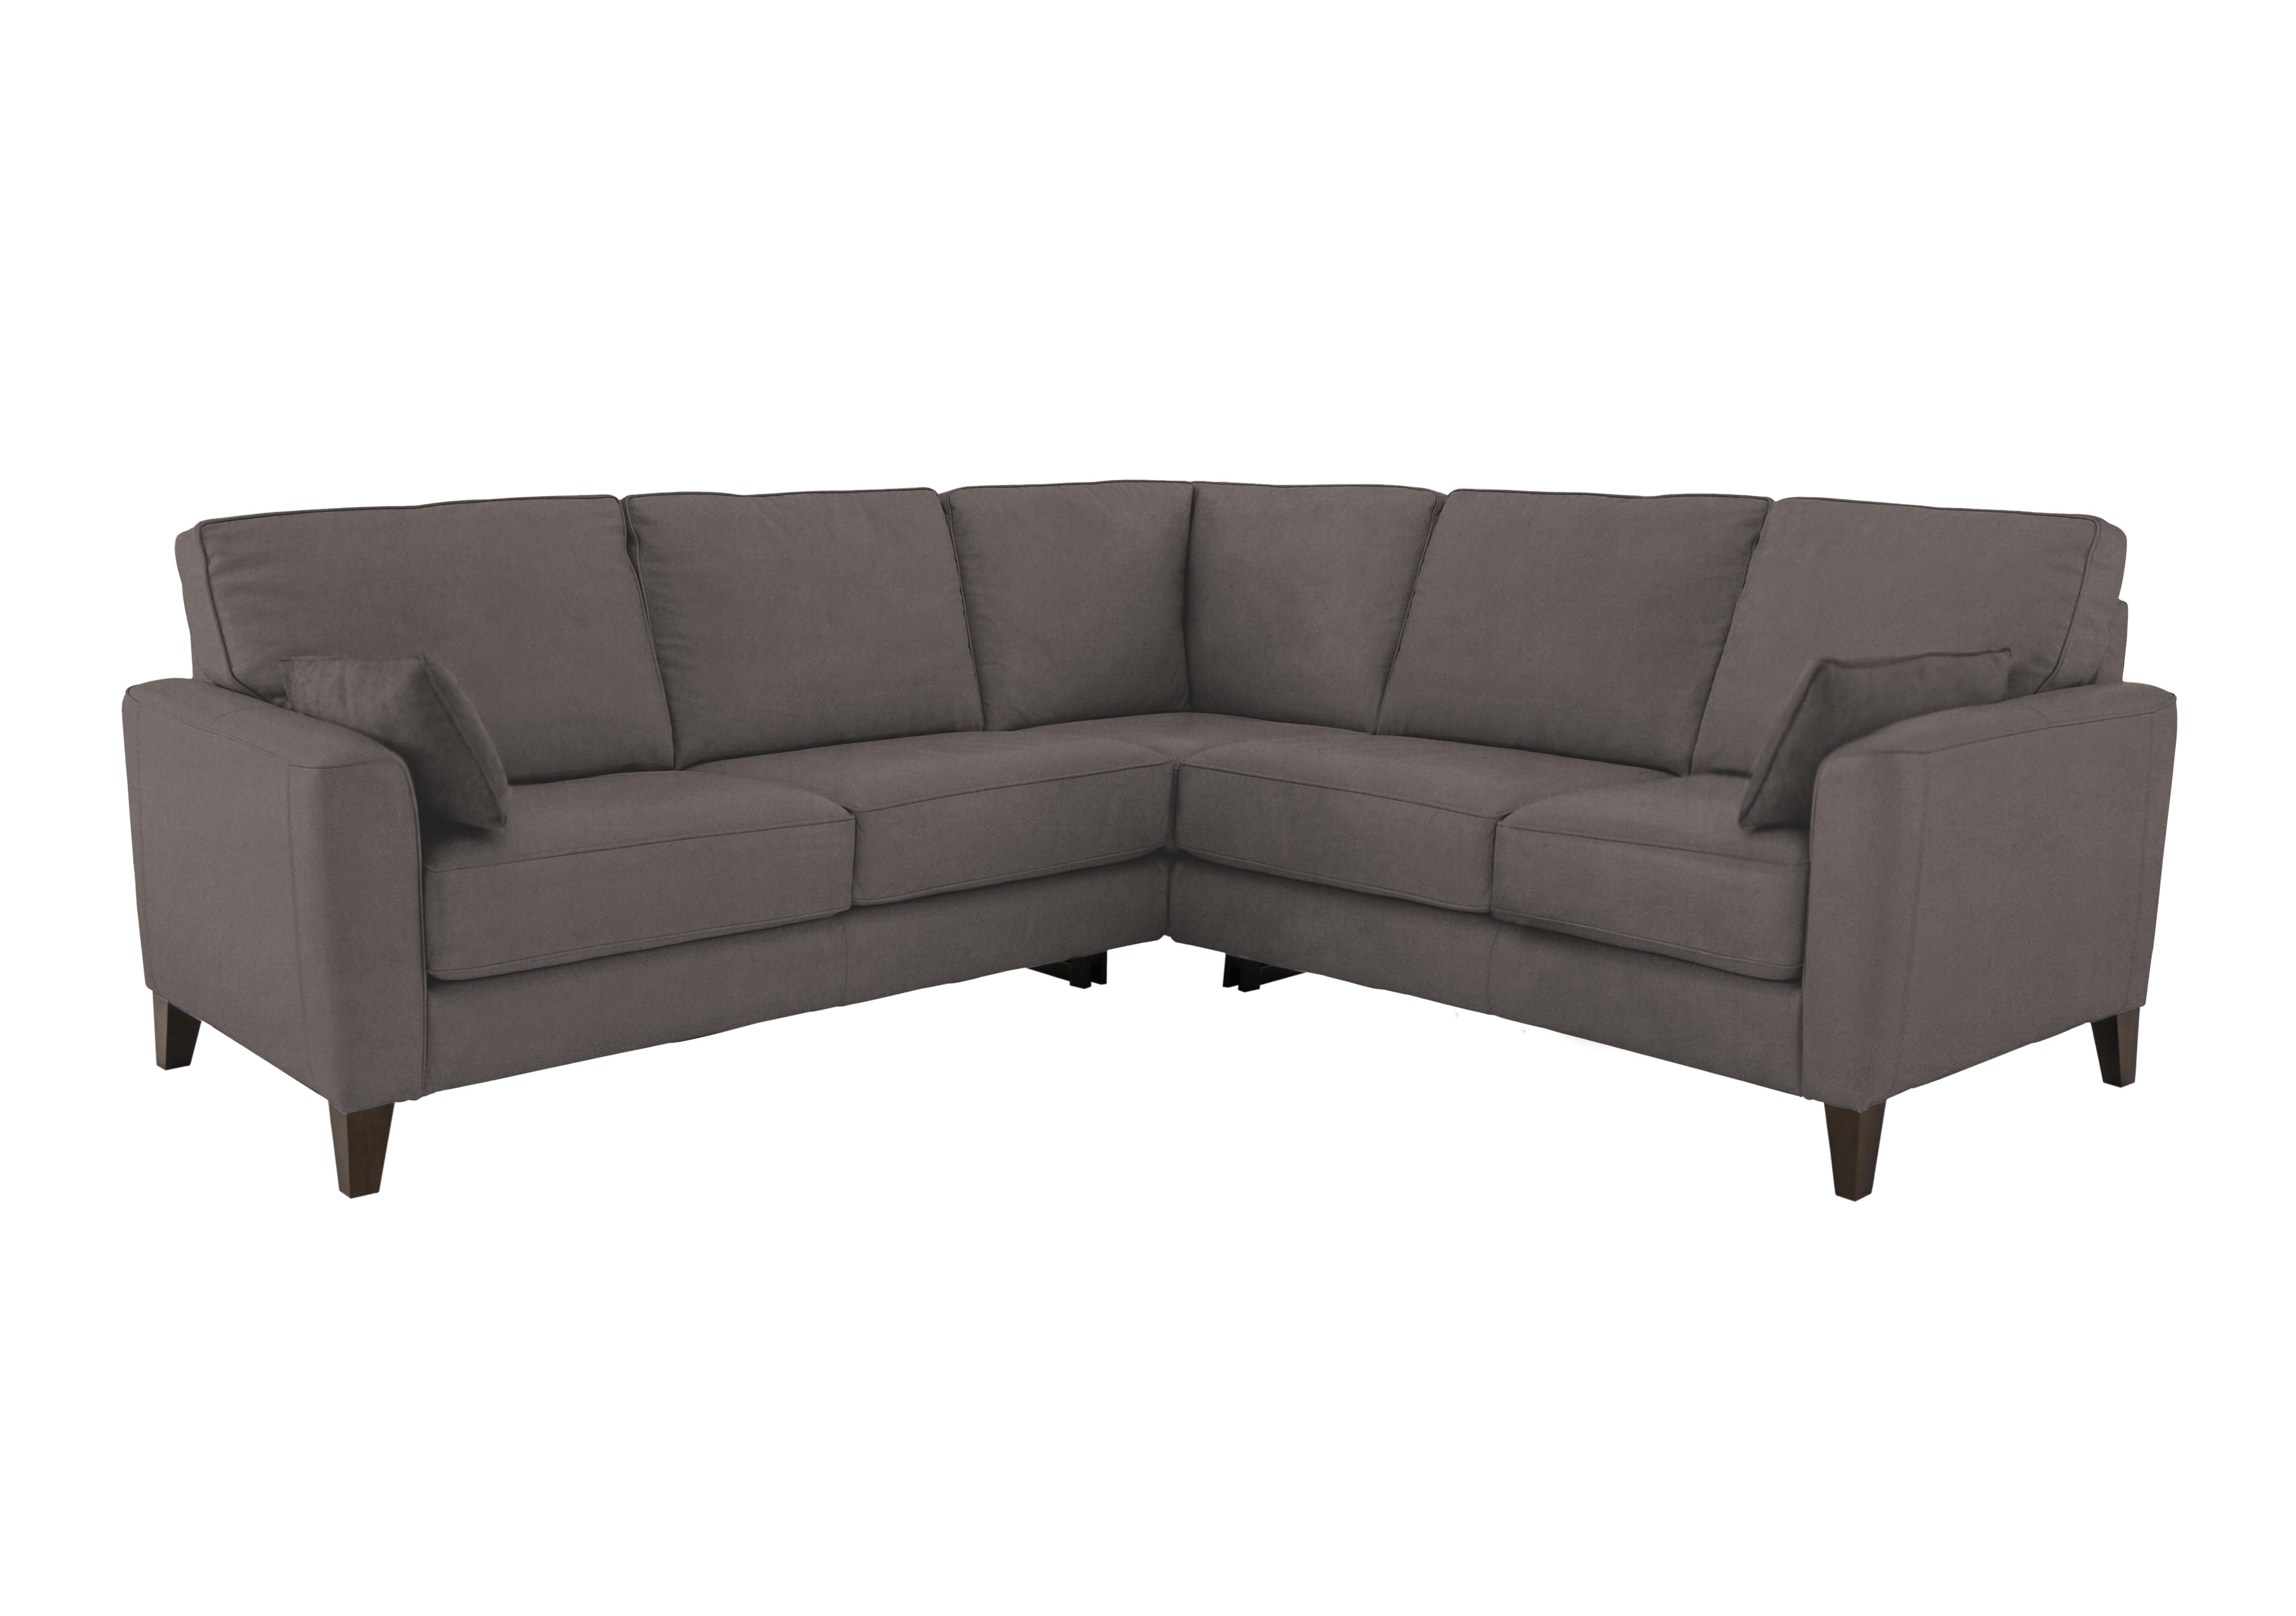 Brondby Large Fabric Corner Sofa in Bfa-Bljr16 Grey on Furniture Village